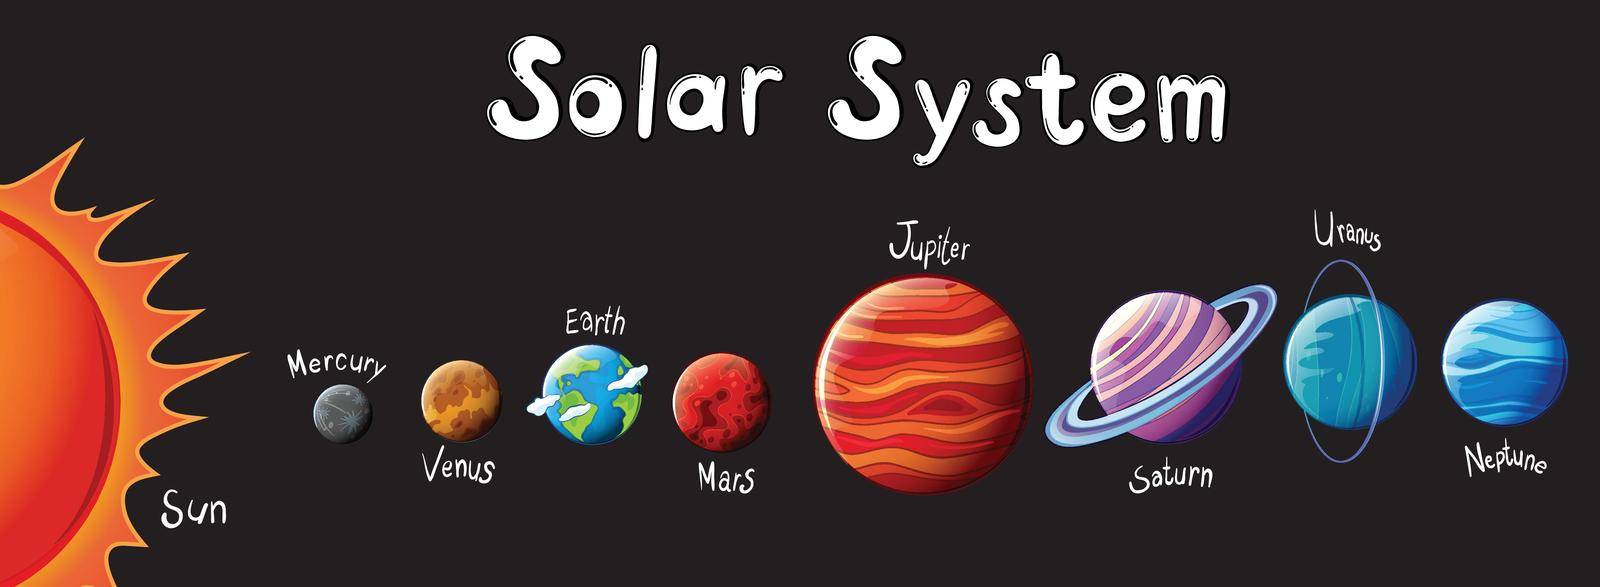 Illustration of the Solar System